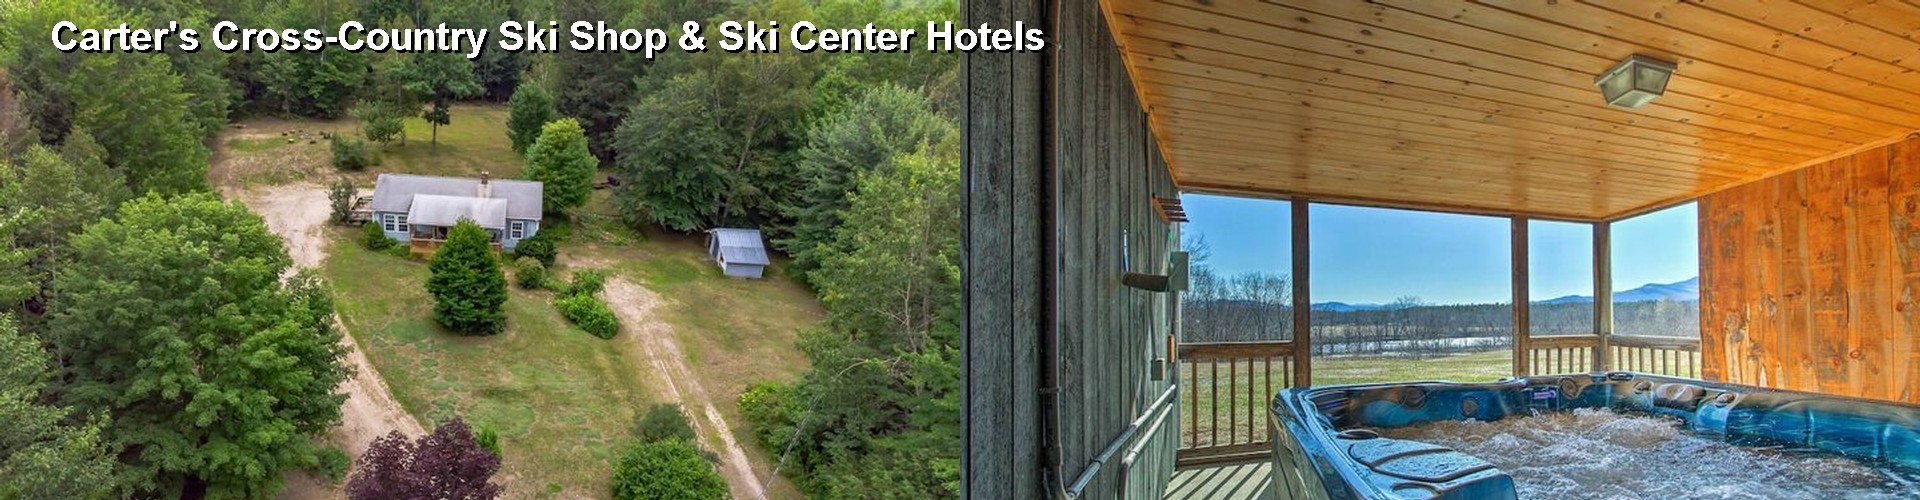 5 Best Hotels near Carter's Cross-Country Ski Shop & Ski Center